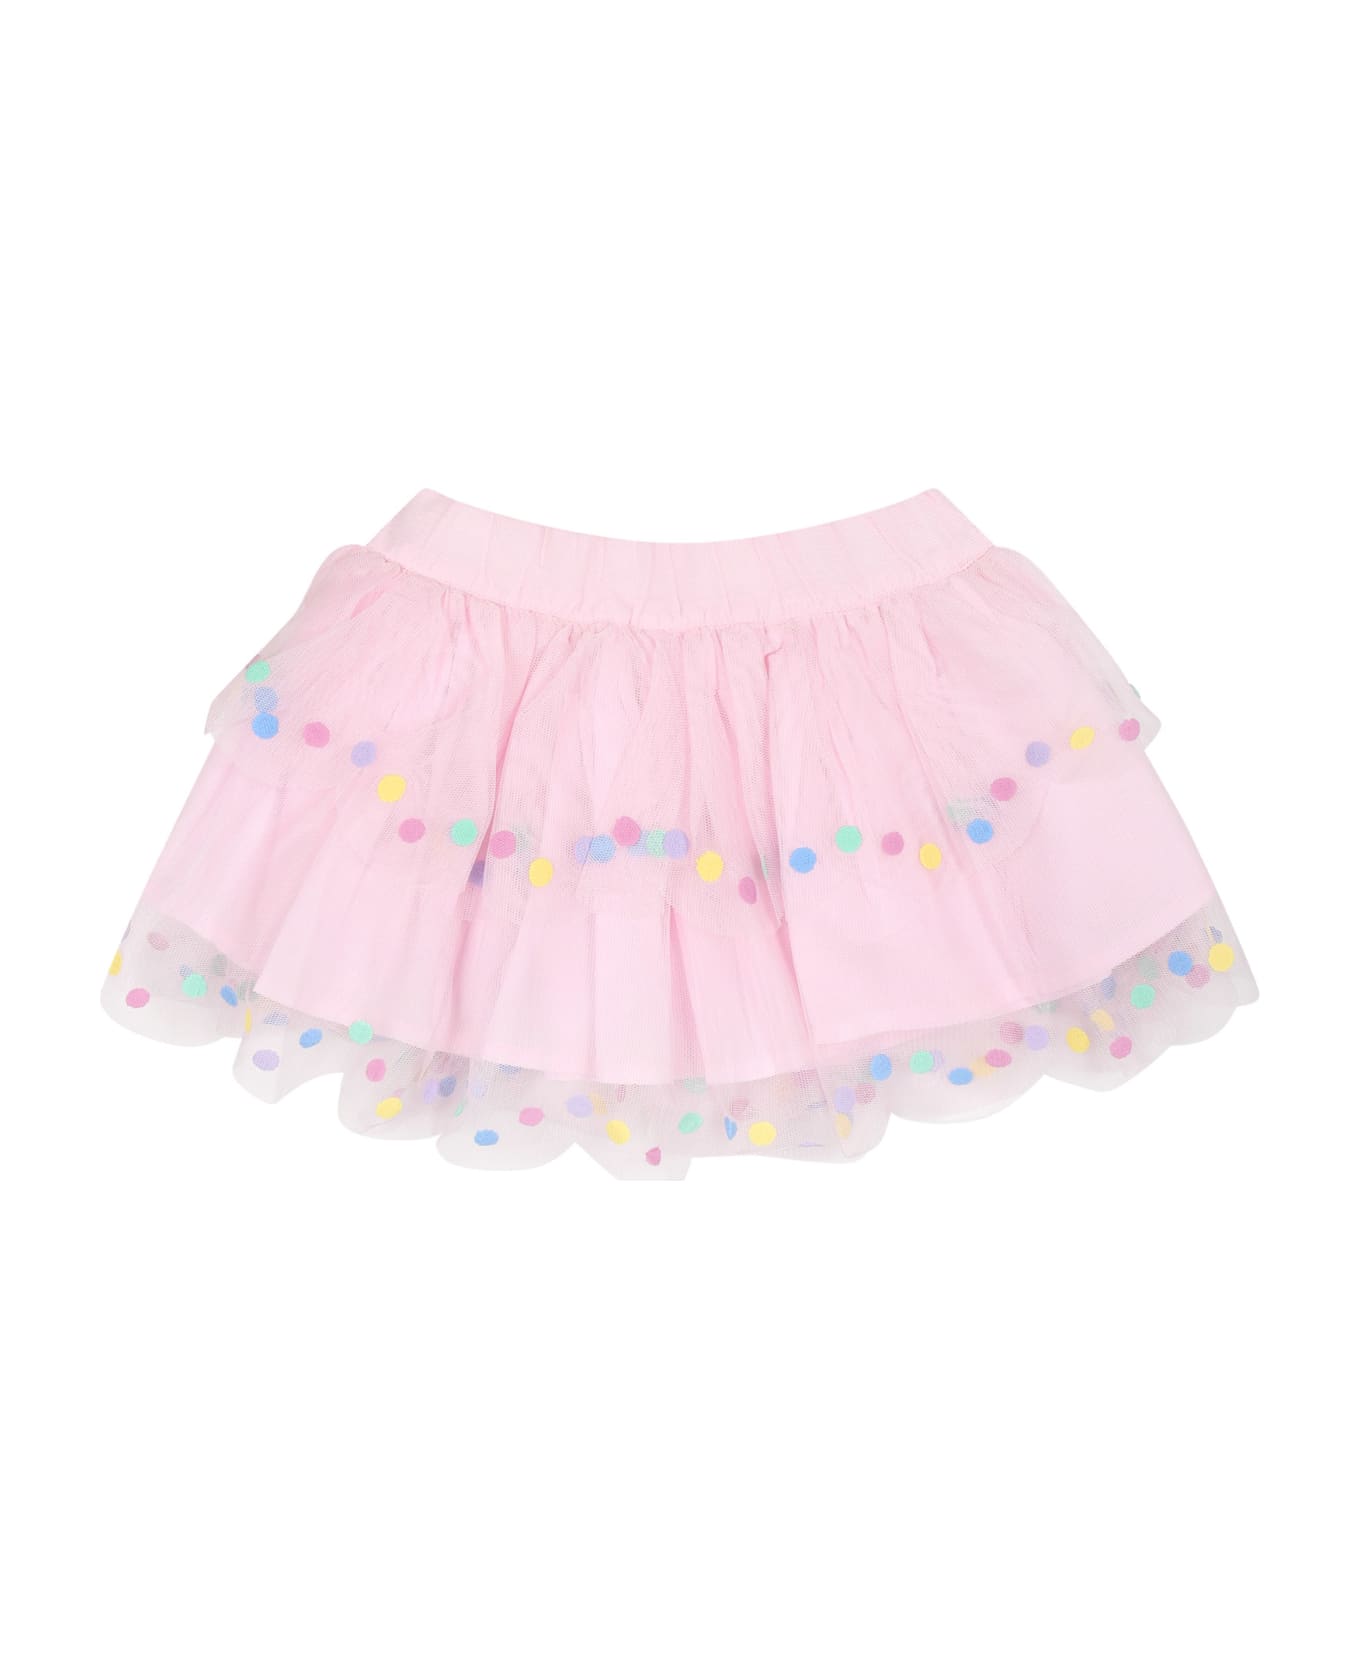 Stella McCartney Kids Pink Tulle Skirt For Baby Girl - Pink